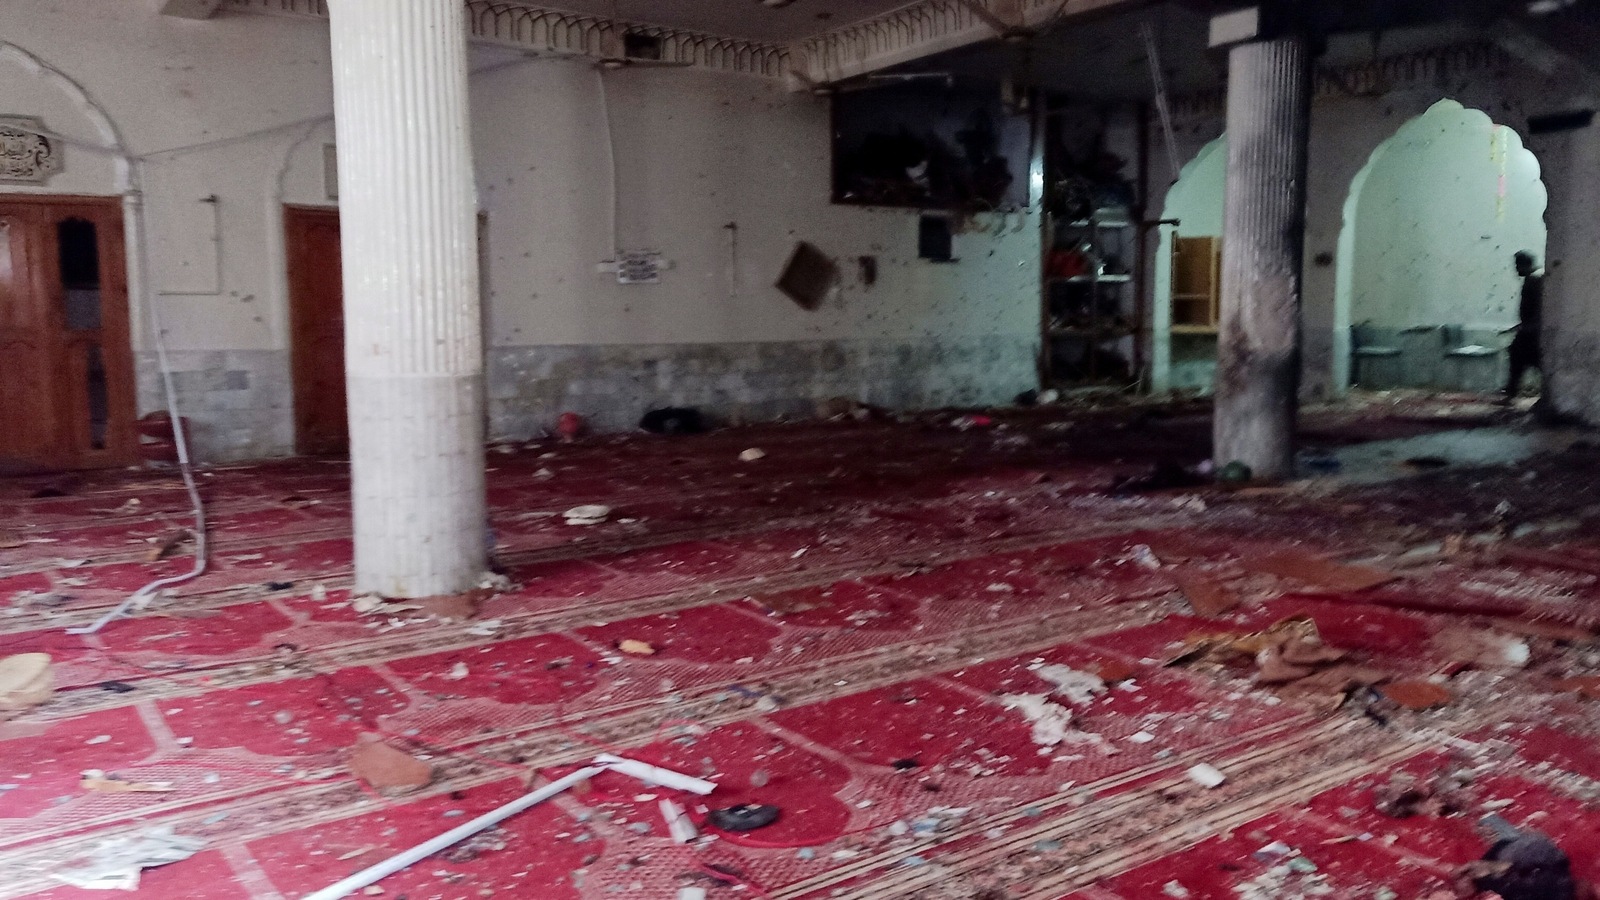 56 killed, 65 injured in major bomb blast inside Peshawar mosque during prayer | World News - Hindustan Times